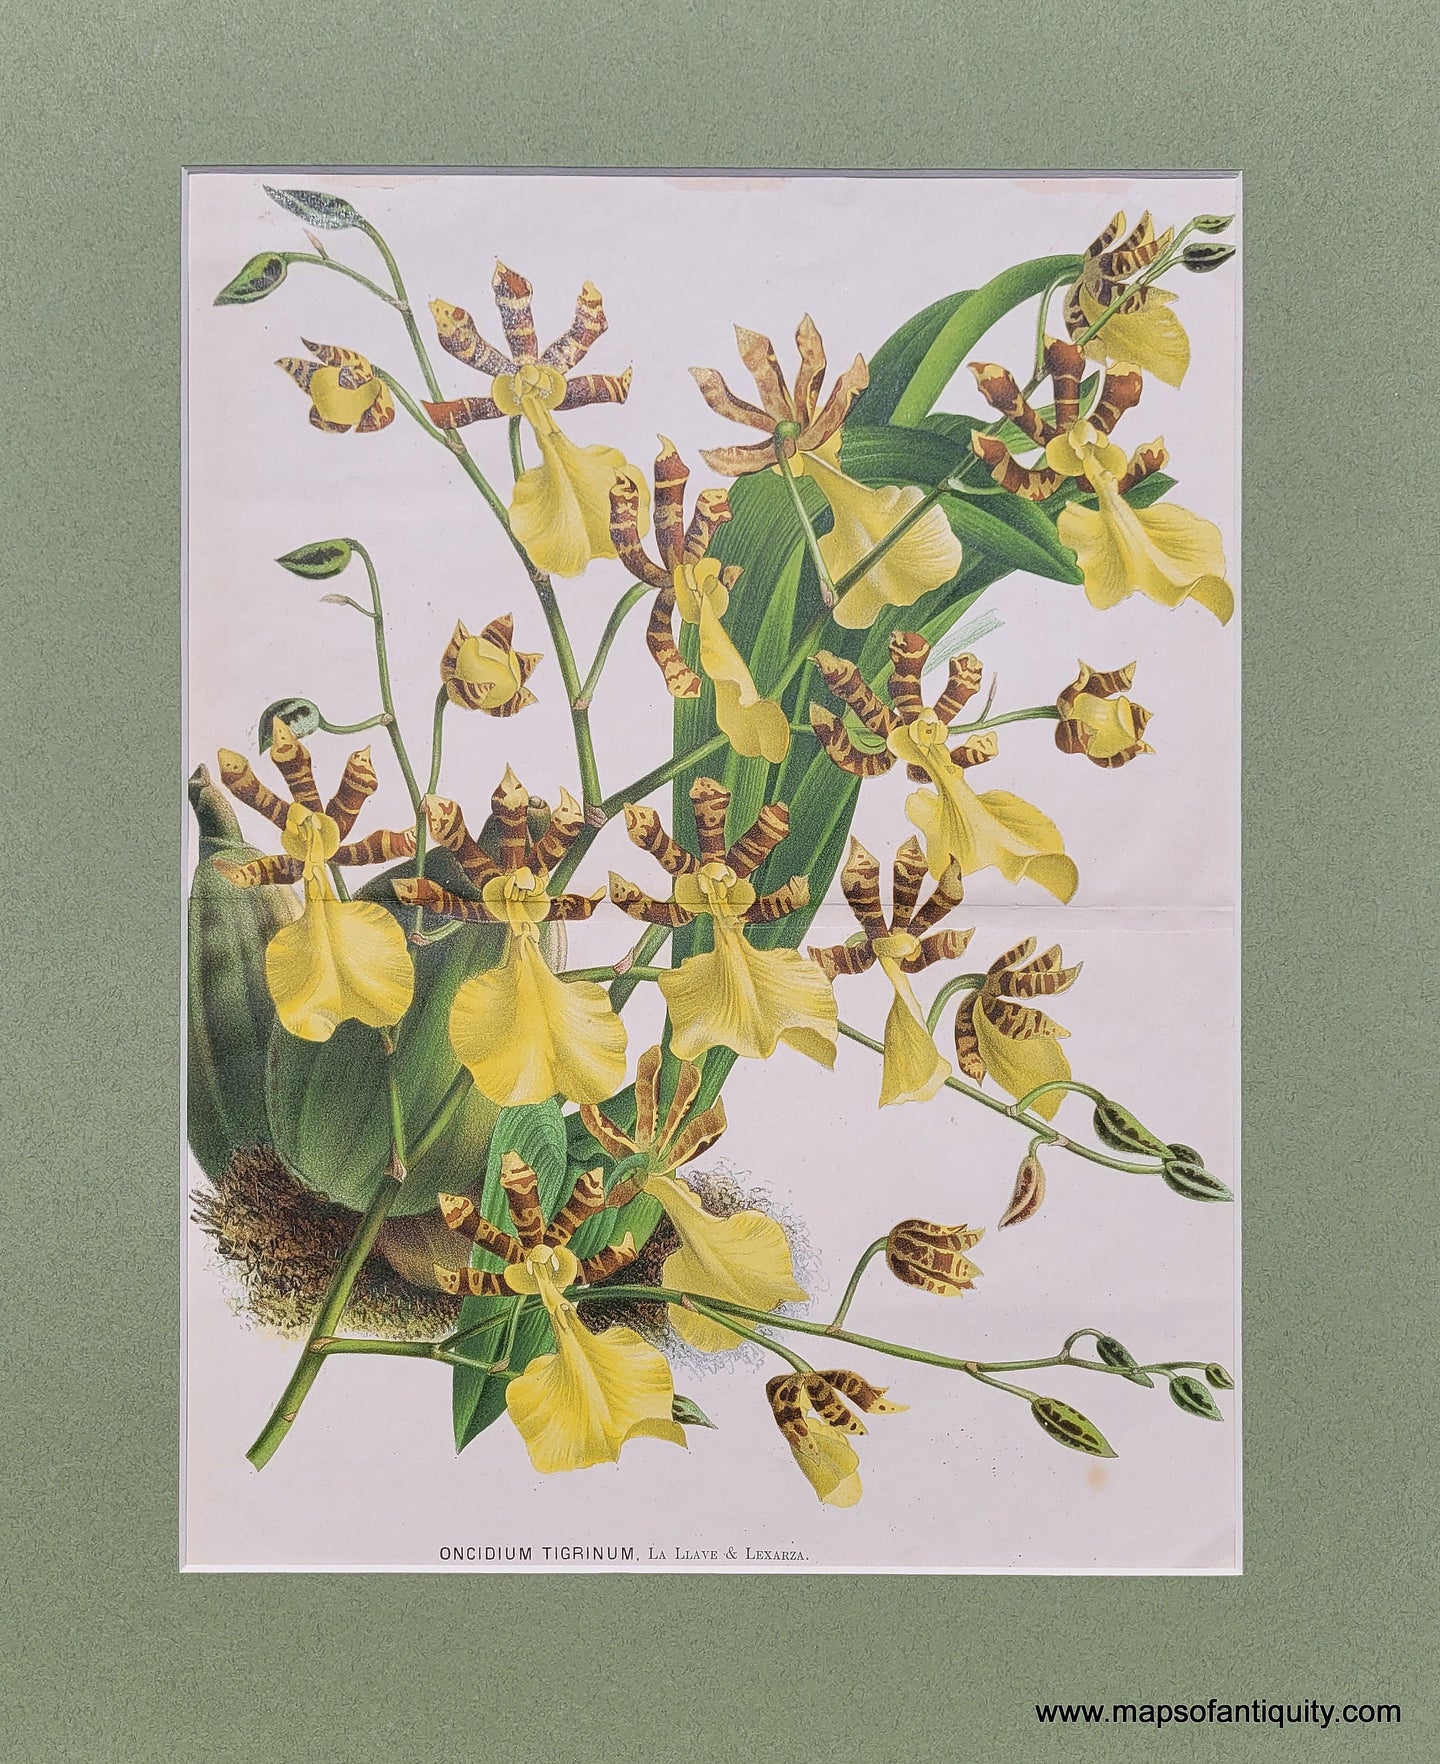 Genuine-Antique-Print-Orchid-The-Tiger-Striped-Oncidium-Oncidium-Tigrinum-1870-Ambroise-Verschaffelt-LIllustration-Horticole-Maps-Of-Antiquity